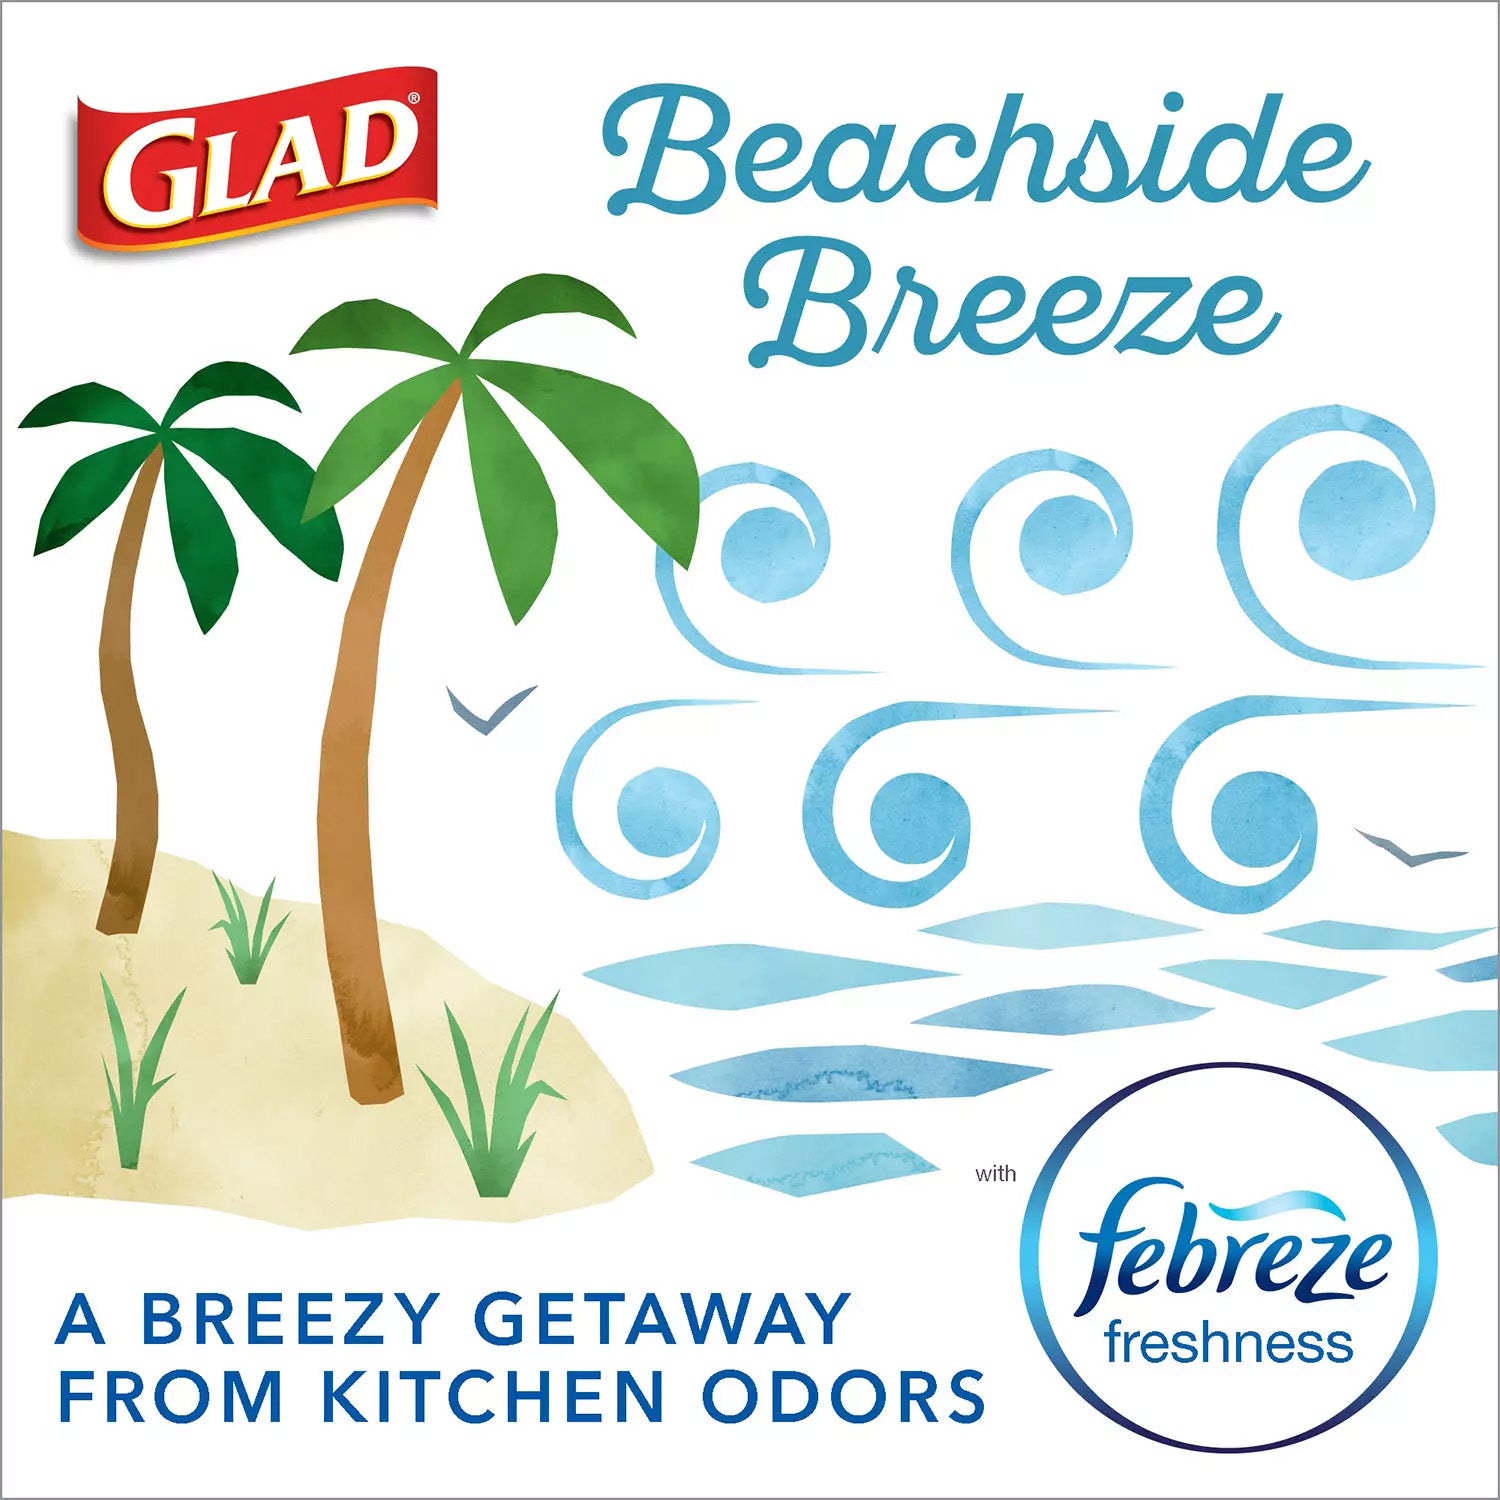 Glad ForceFlex Plus Drawstring Bags, Tall Kitchen, Beachside Breeze - 34 bags